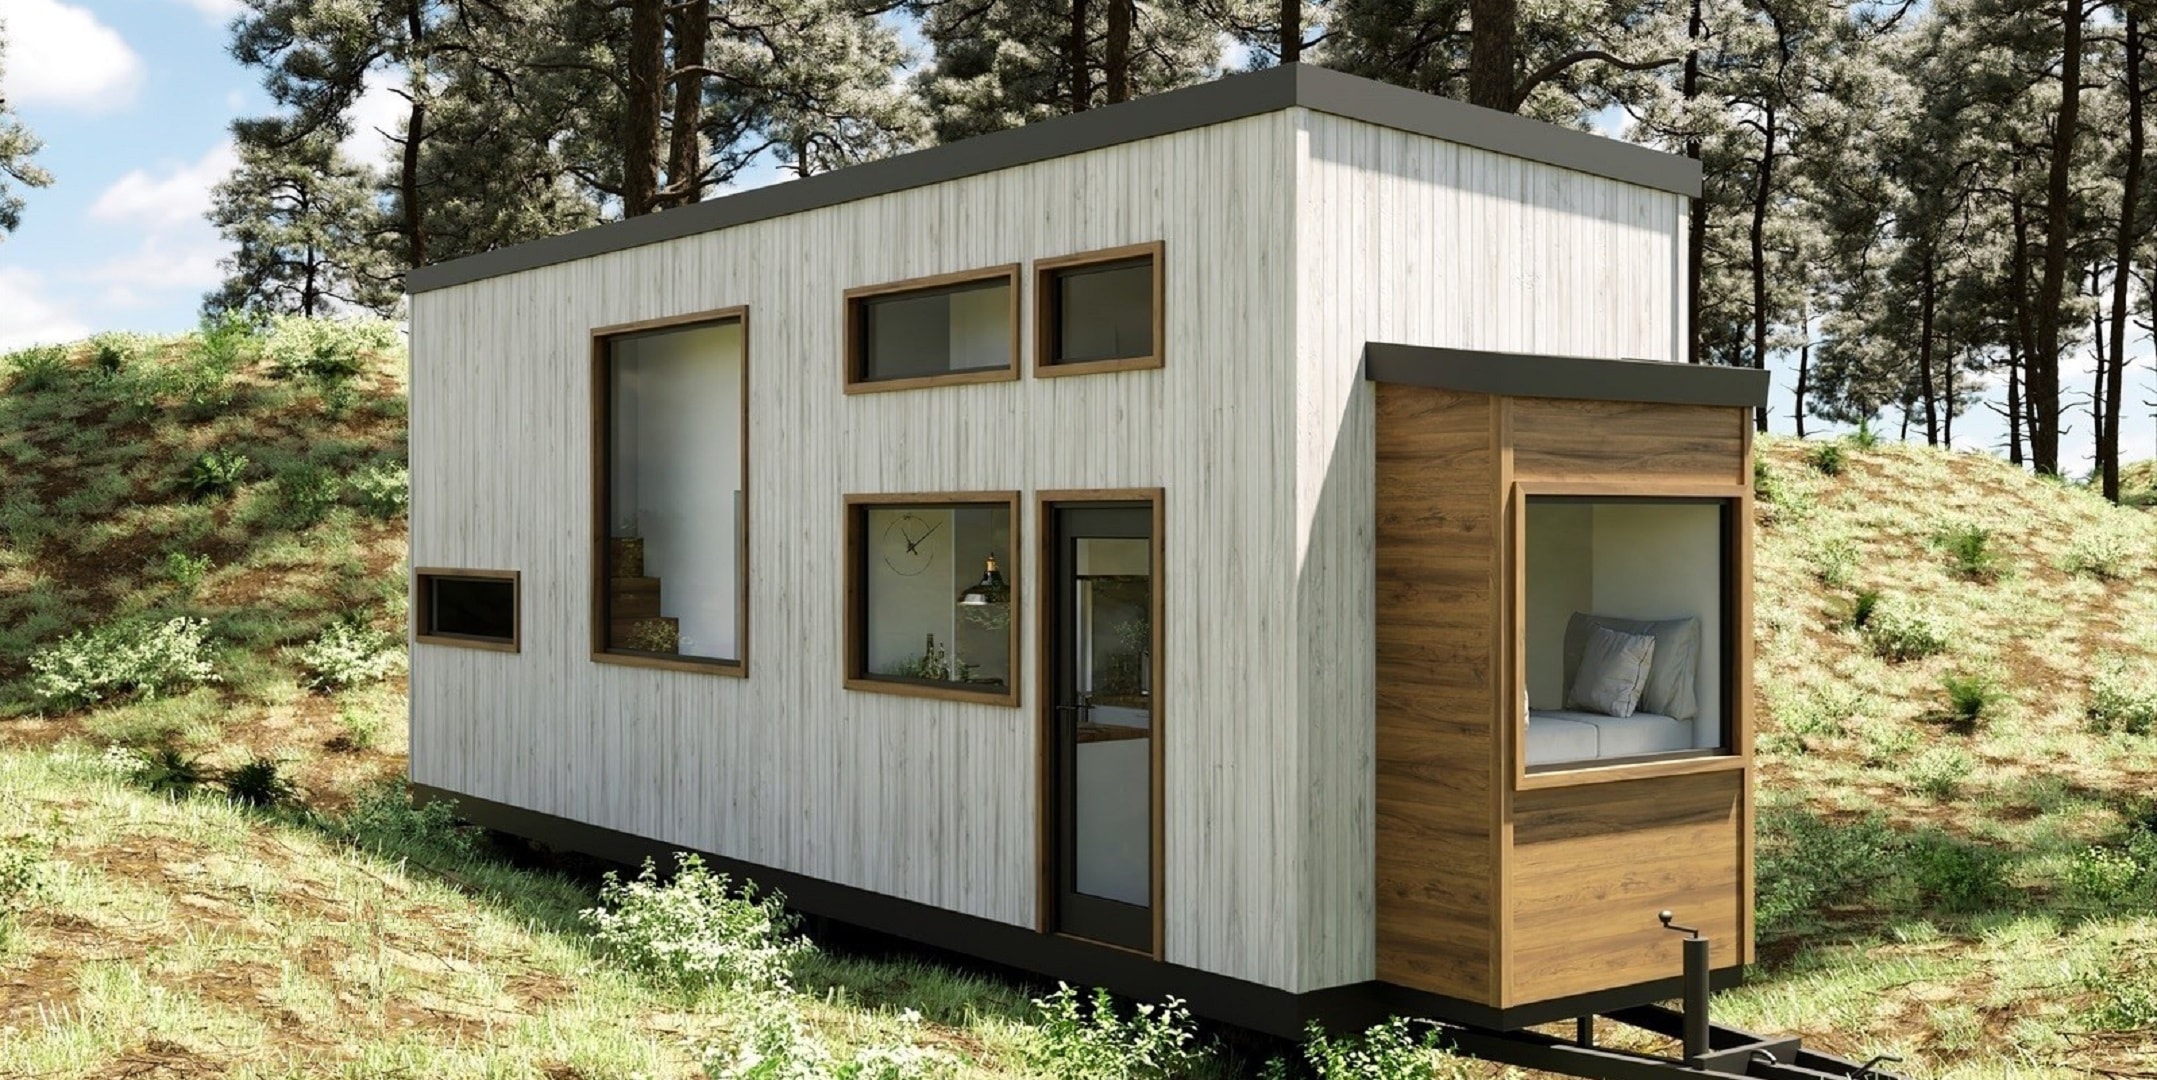 La Familia Tiny House Is Not So Tiny, Has Three Bedrooms and an Extra Multi-Purpose Room